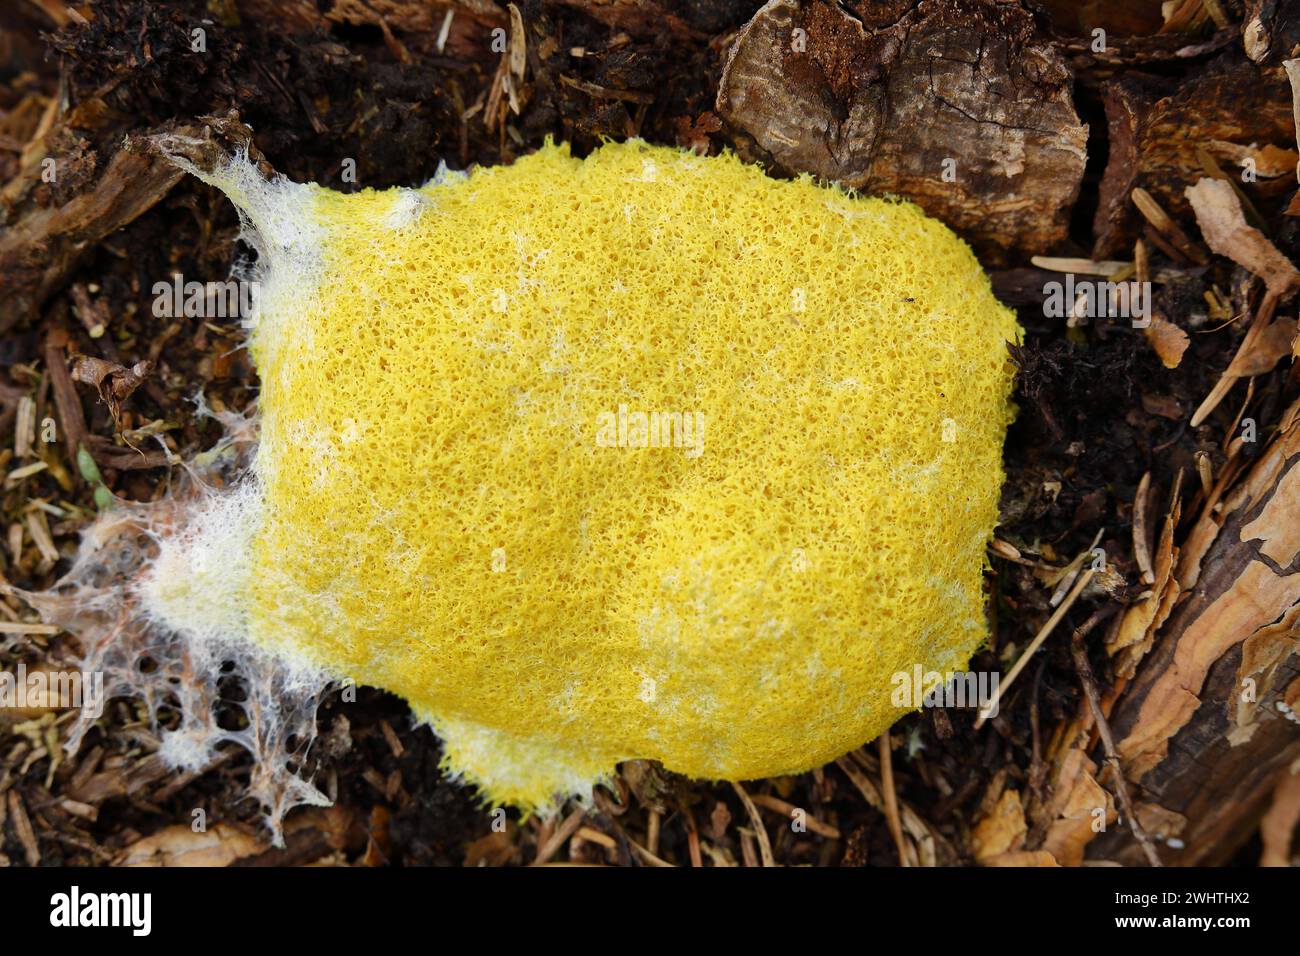 Dog vomit slime mold (Fuligo septica), witch's butter, yellow foamy fruiting body on tree stump, Wilnsdorf, North Rhine-Westphalia, Germany Stock Photo